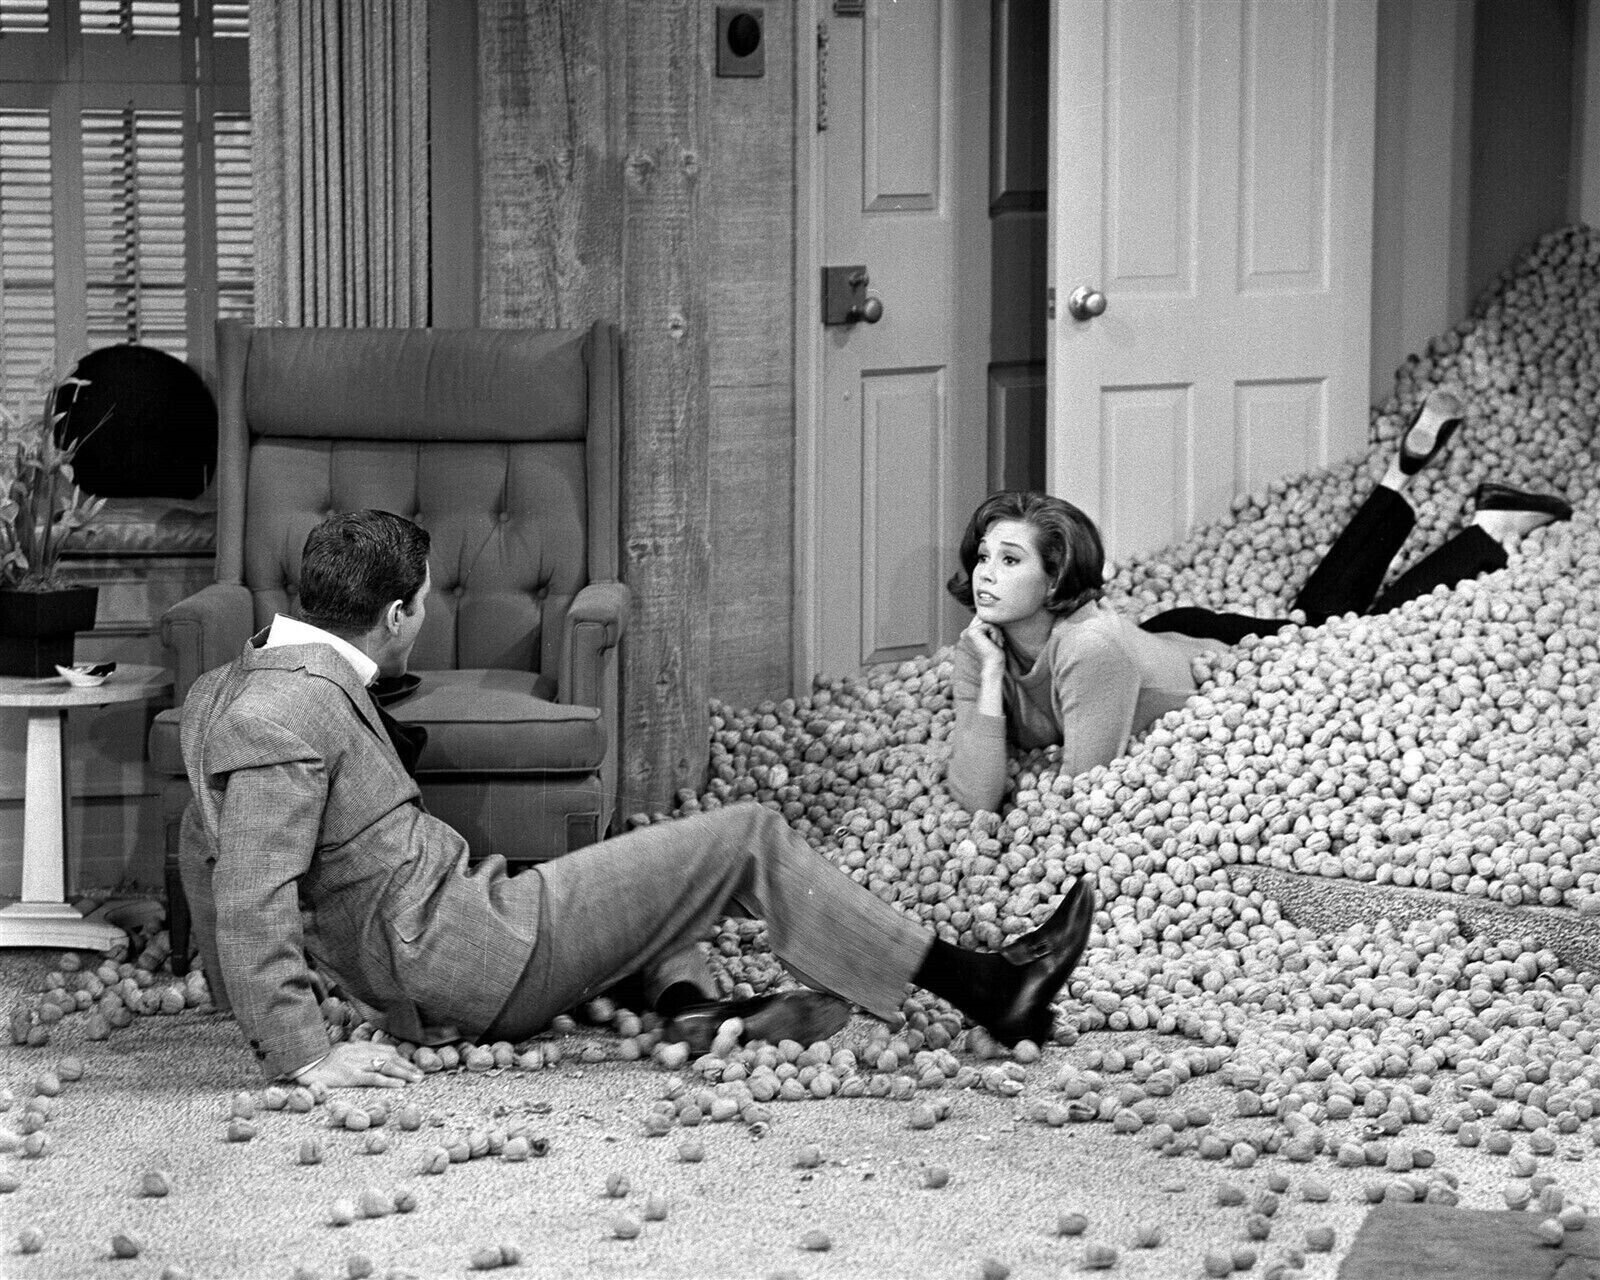 Dick Van Dyke Show 1963 Dick & Mary Tyler Moore in pile of walnuts 5x7 photo